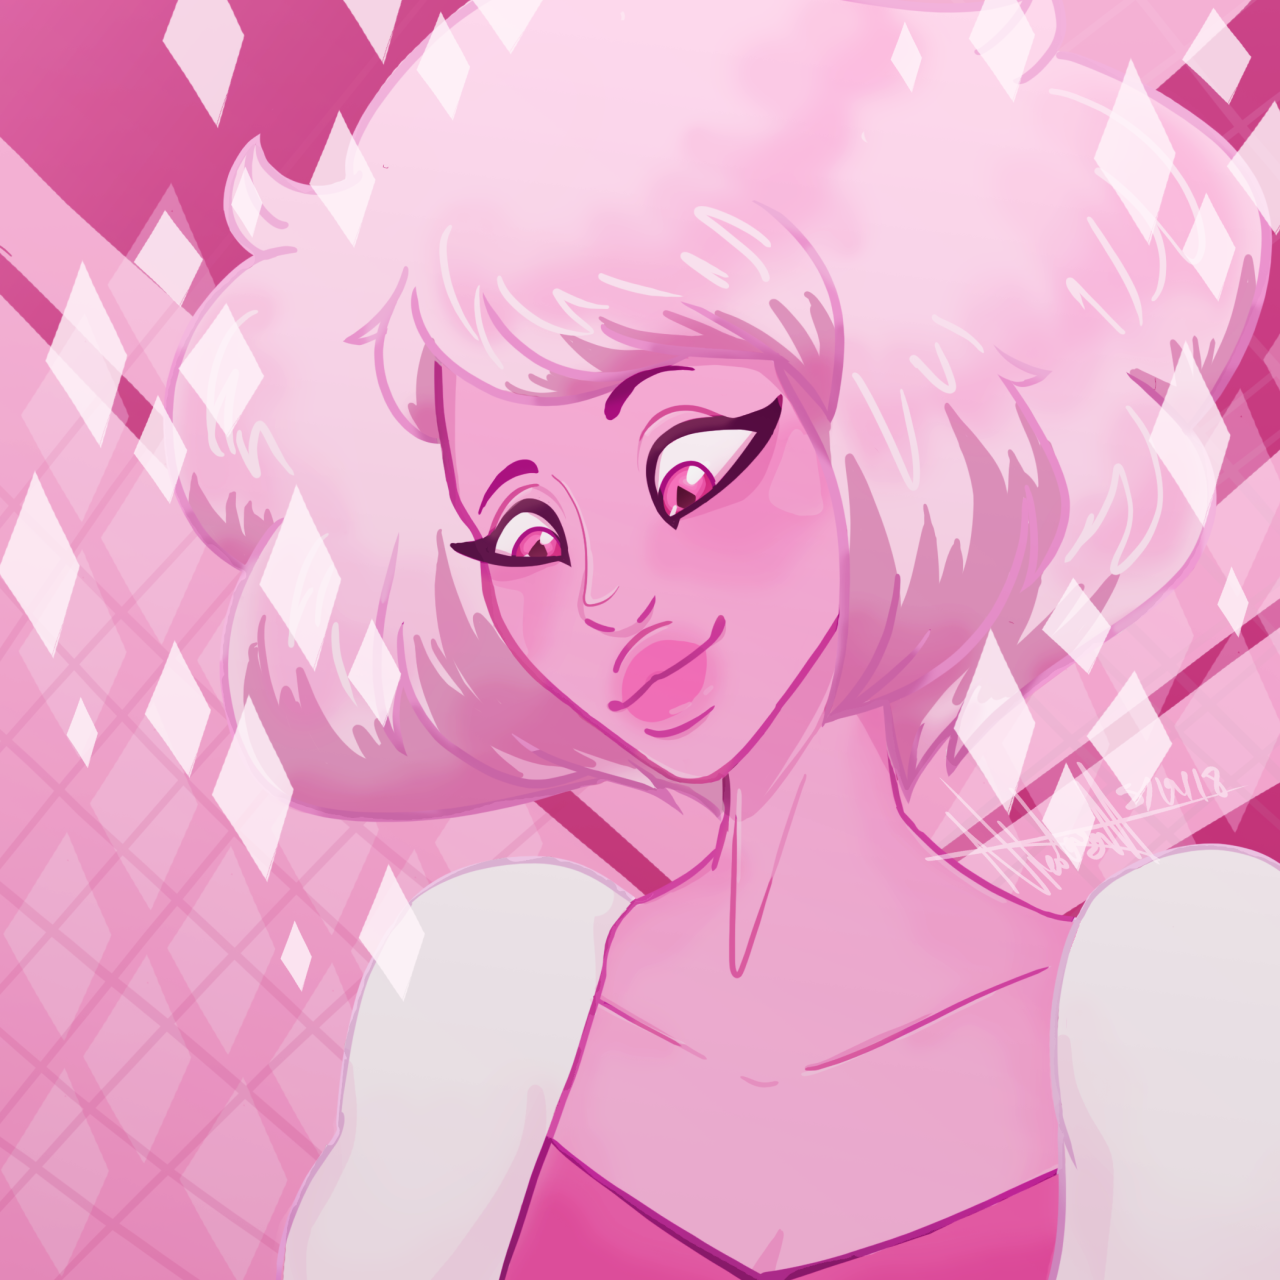 soft pink diamond, she has such a fun design